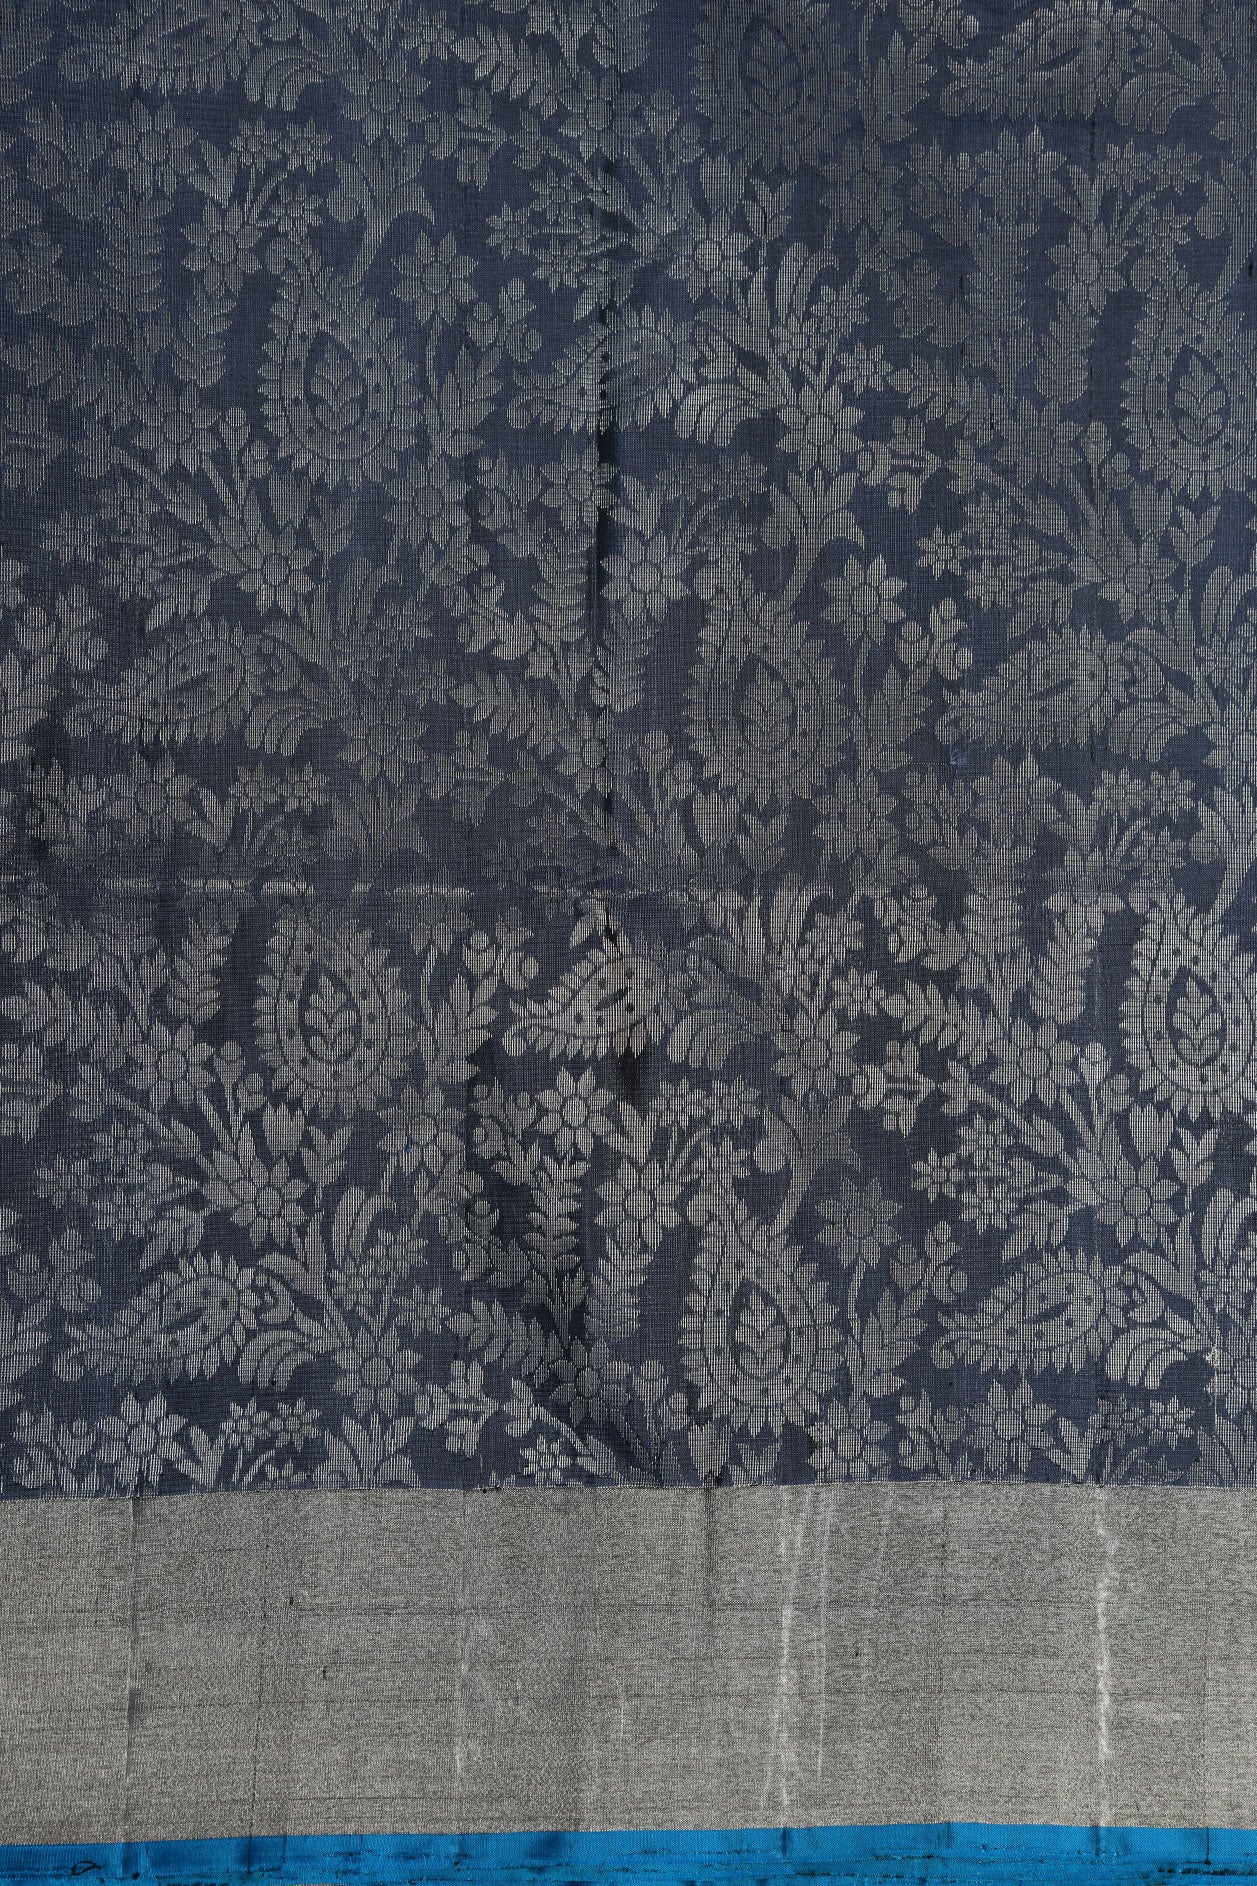 Brocade With Bavanchi Border Charcoal Grey Soft Silk Saree